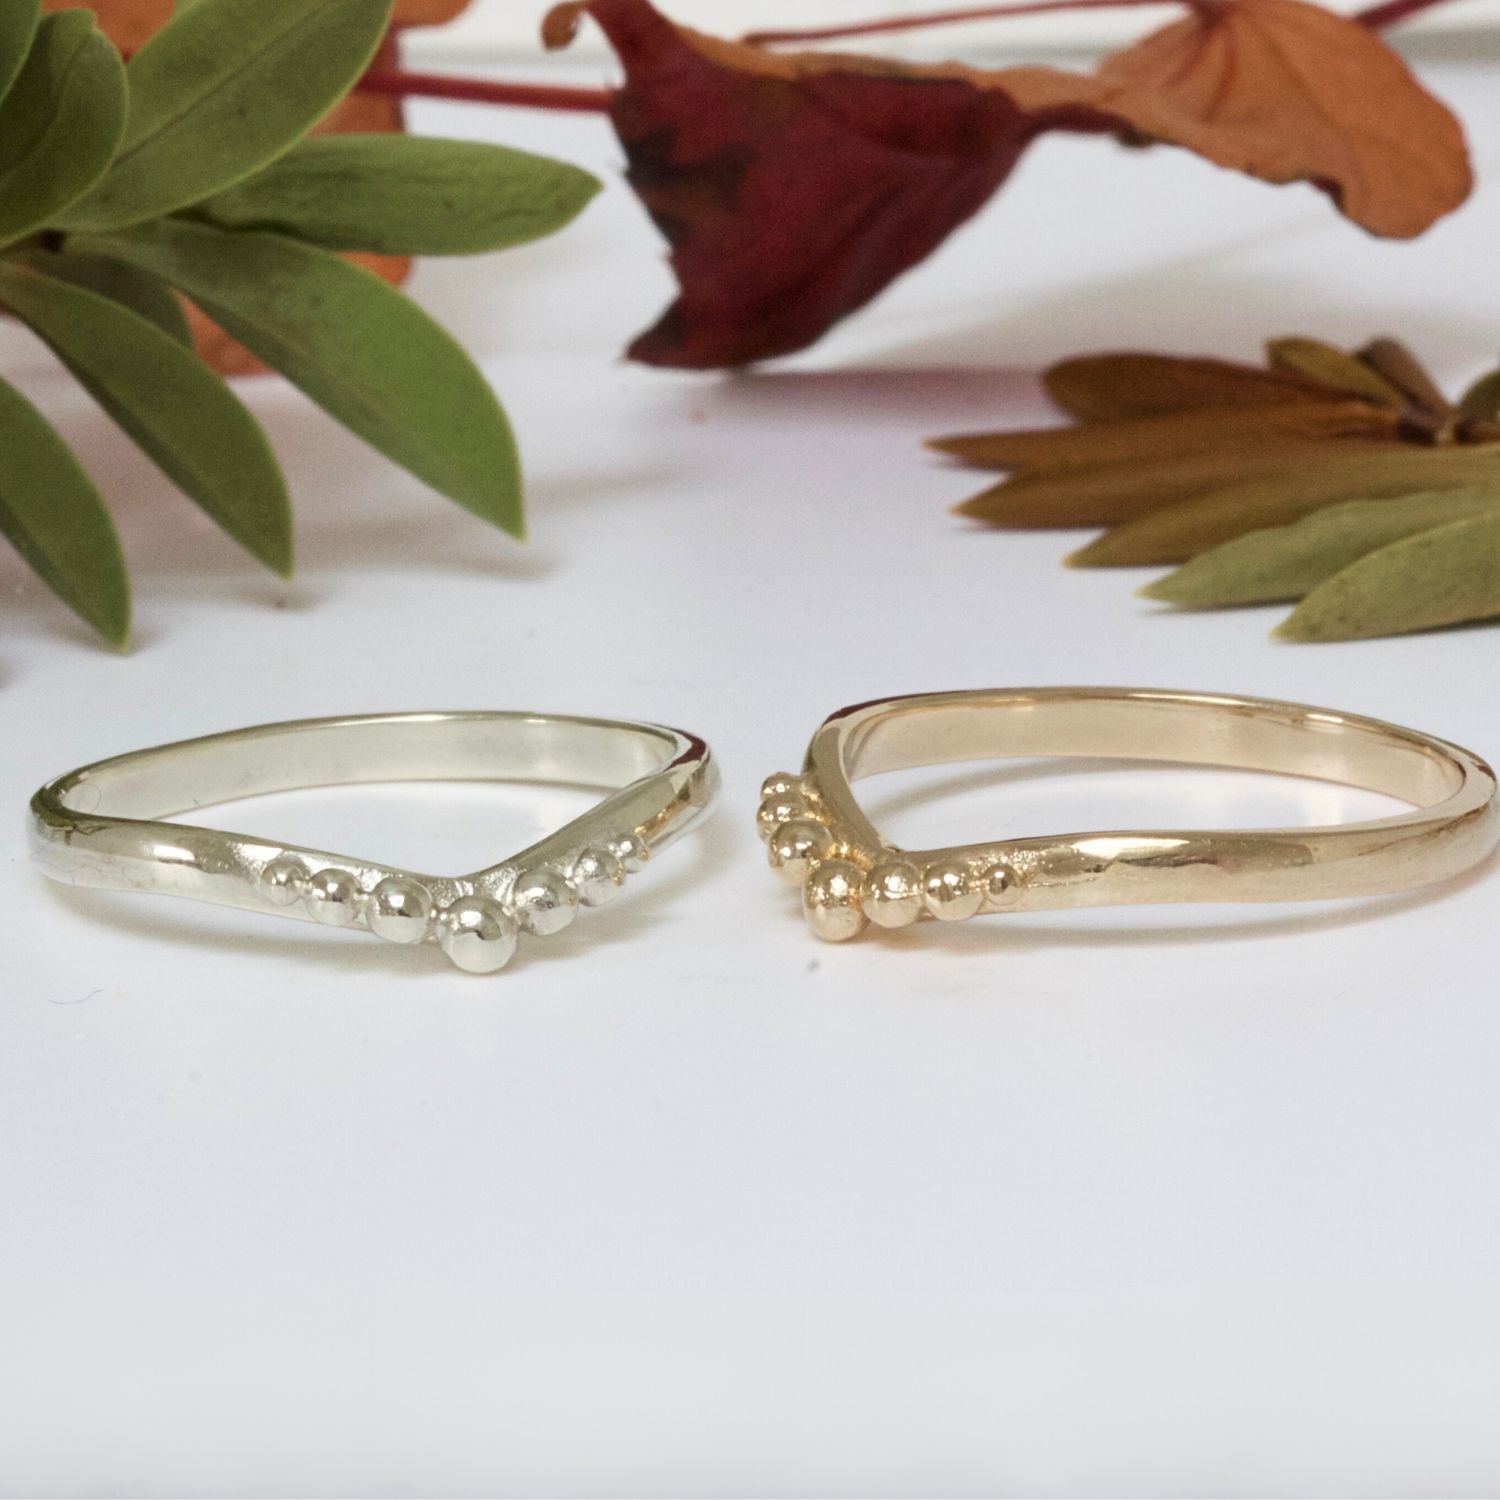 shaped nature wedding ring